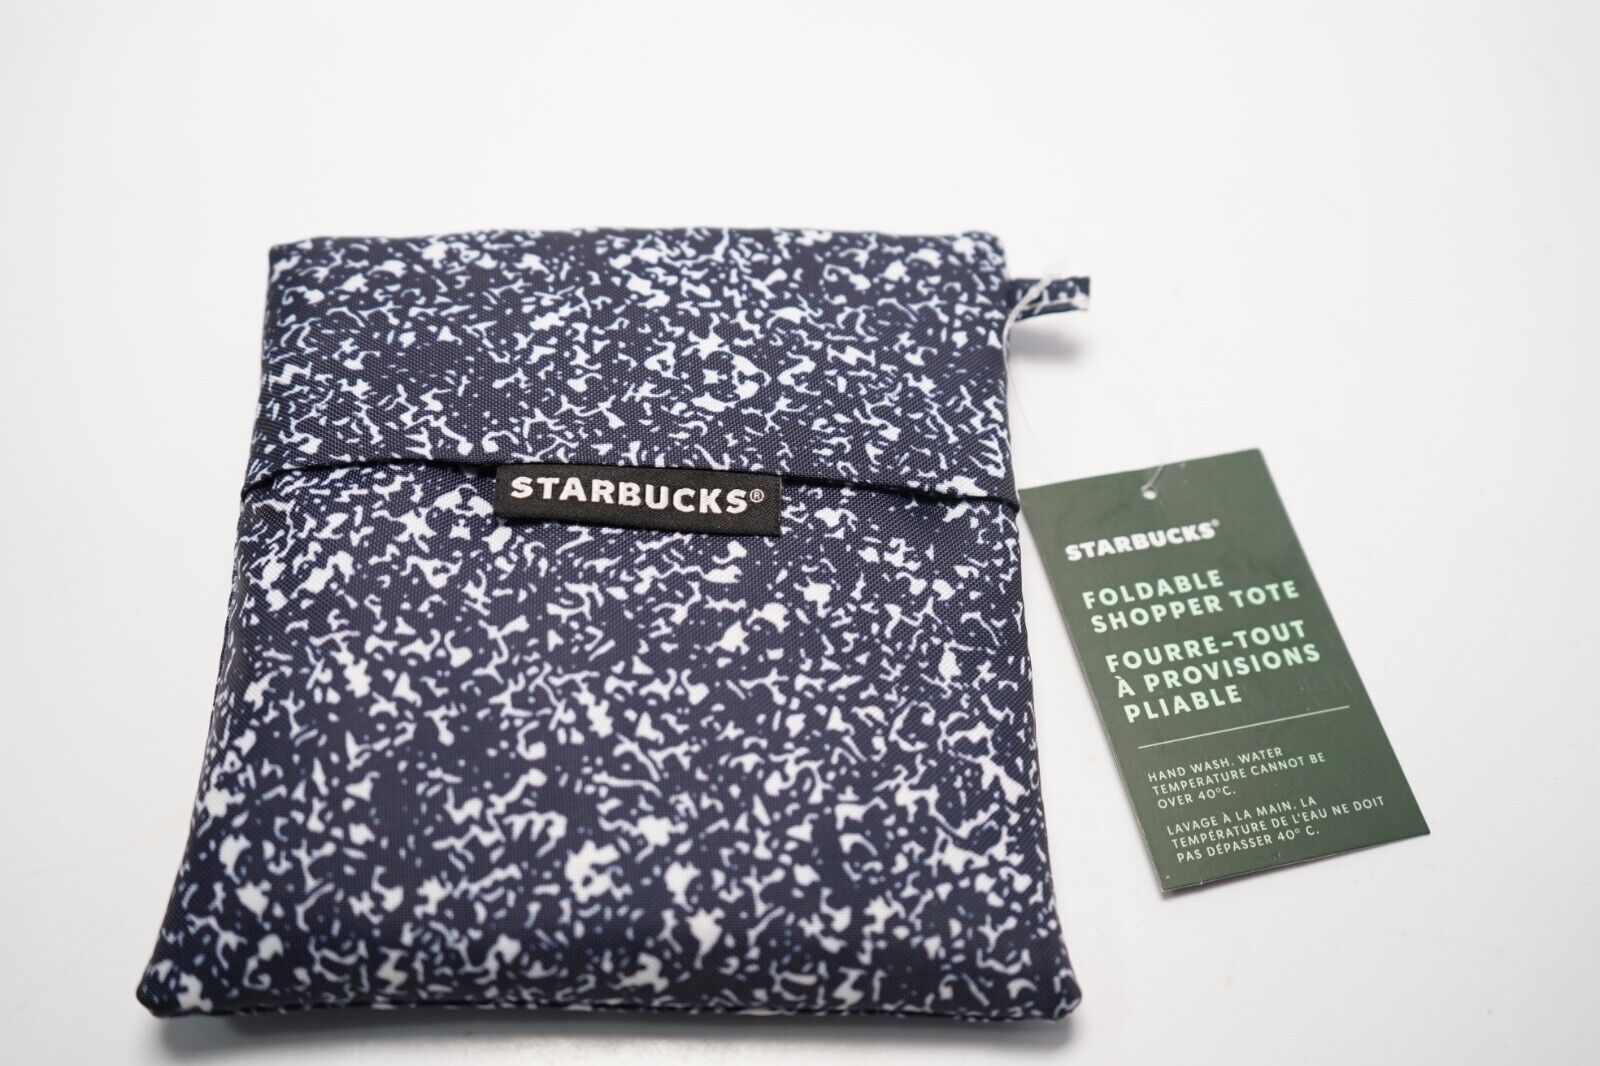 Starbucks Foldable Shopper Tote Blue White Spot New with Tags Reusable Bag